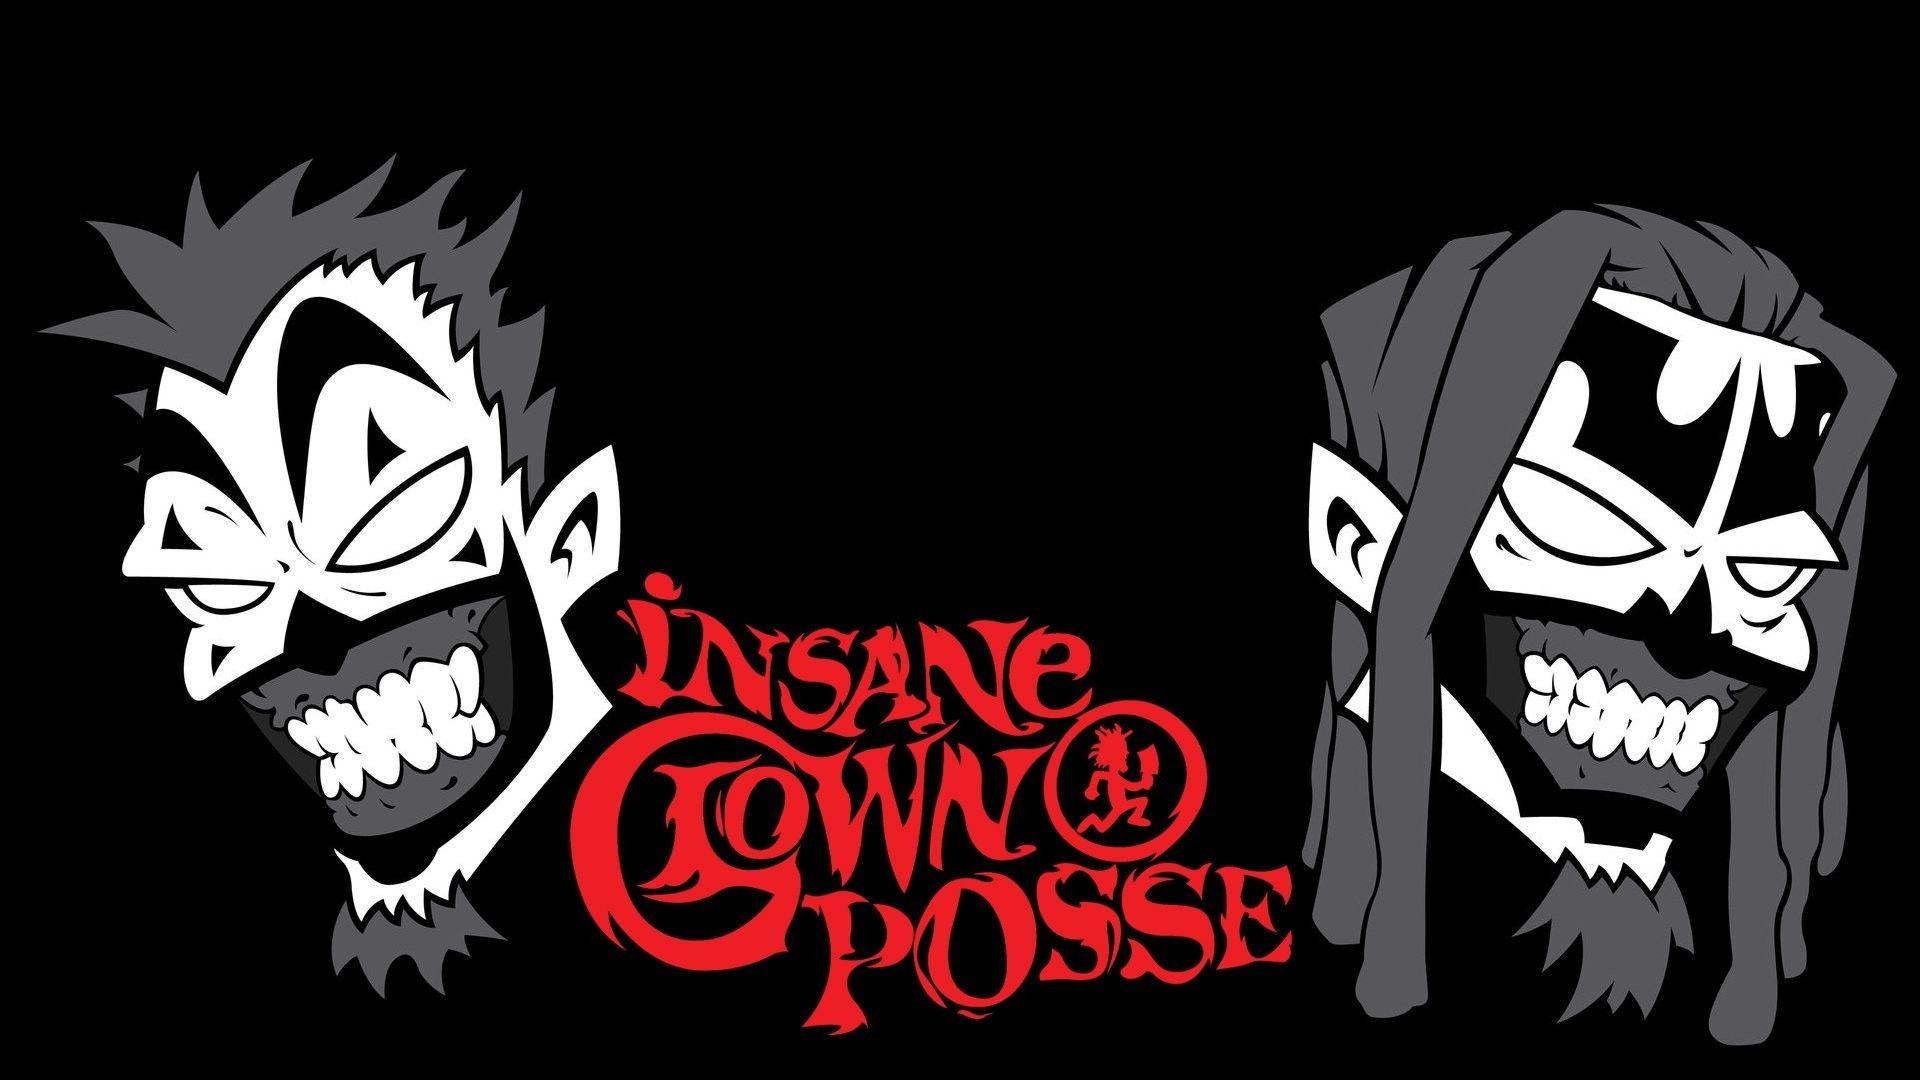 Clown posse insane